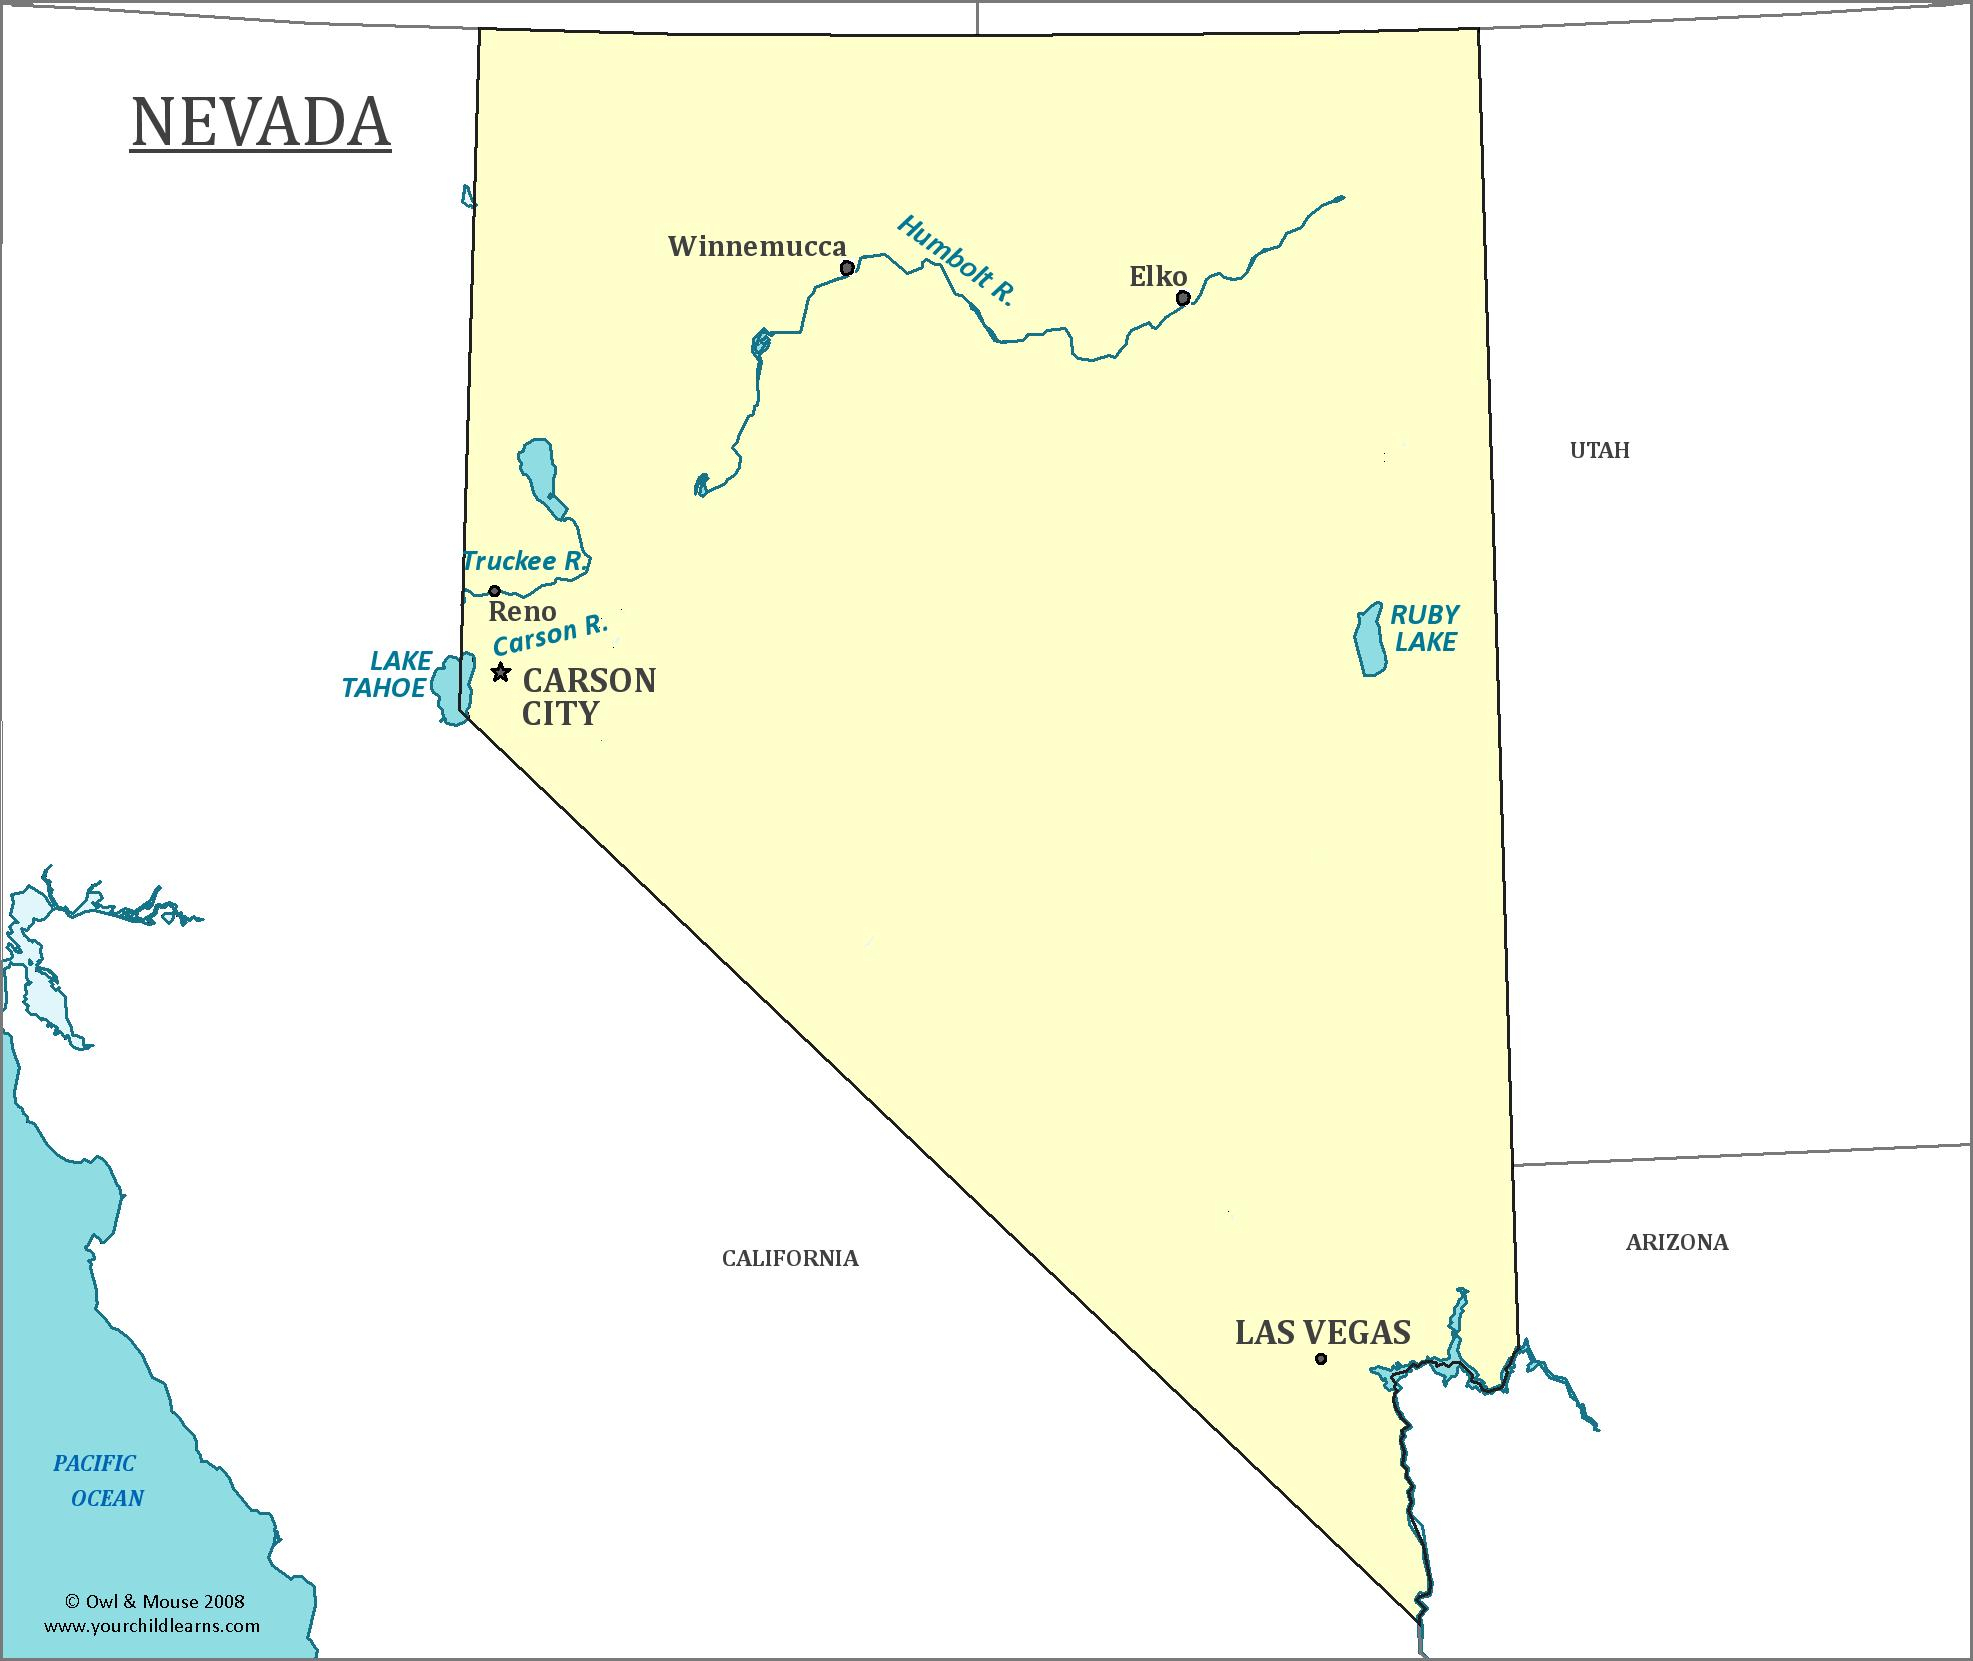 Carte Nevada - La Carte De Las Vegas, Nevada (États-Unis D&amp;#039;amérique) - Map Of Las Vegas And California